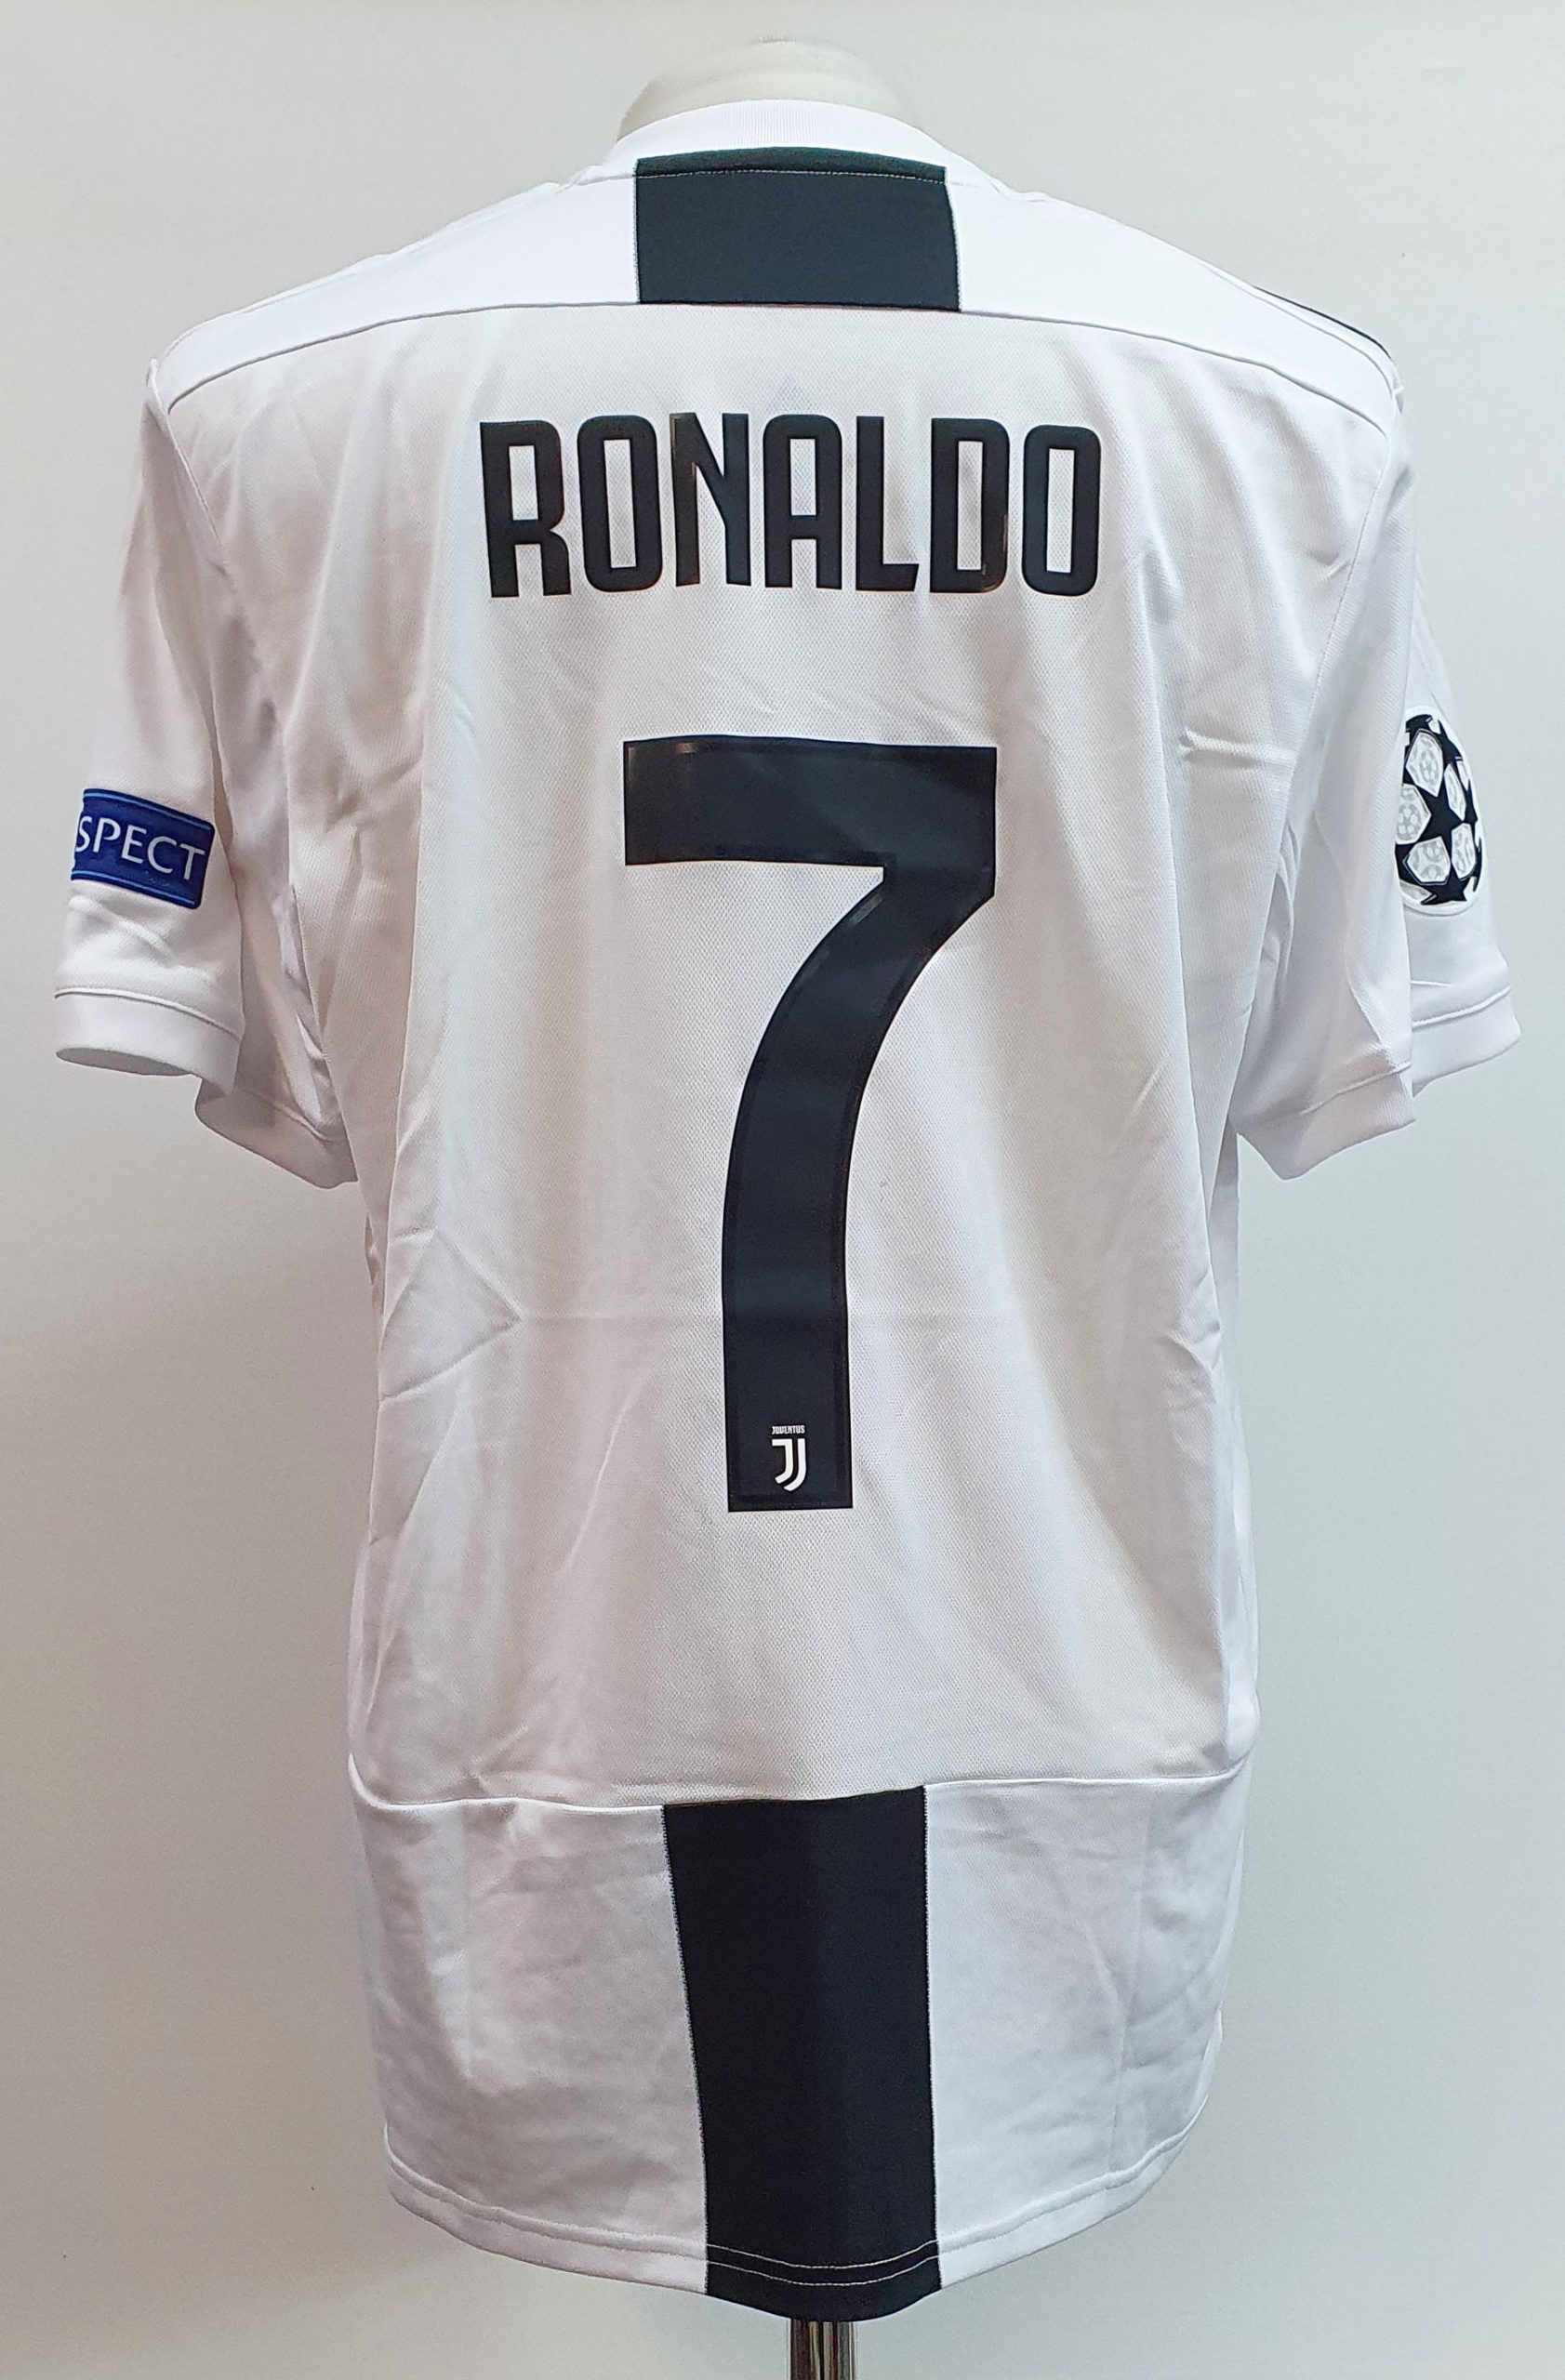 Juventus 2018-19 maglia Adidas Cristiano Ronaldo #7 third